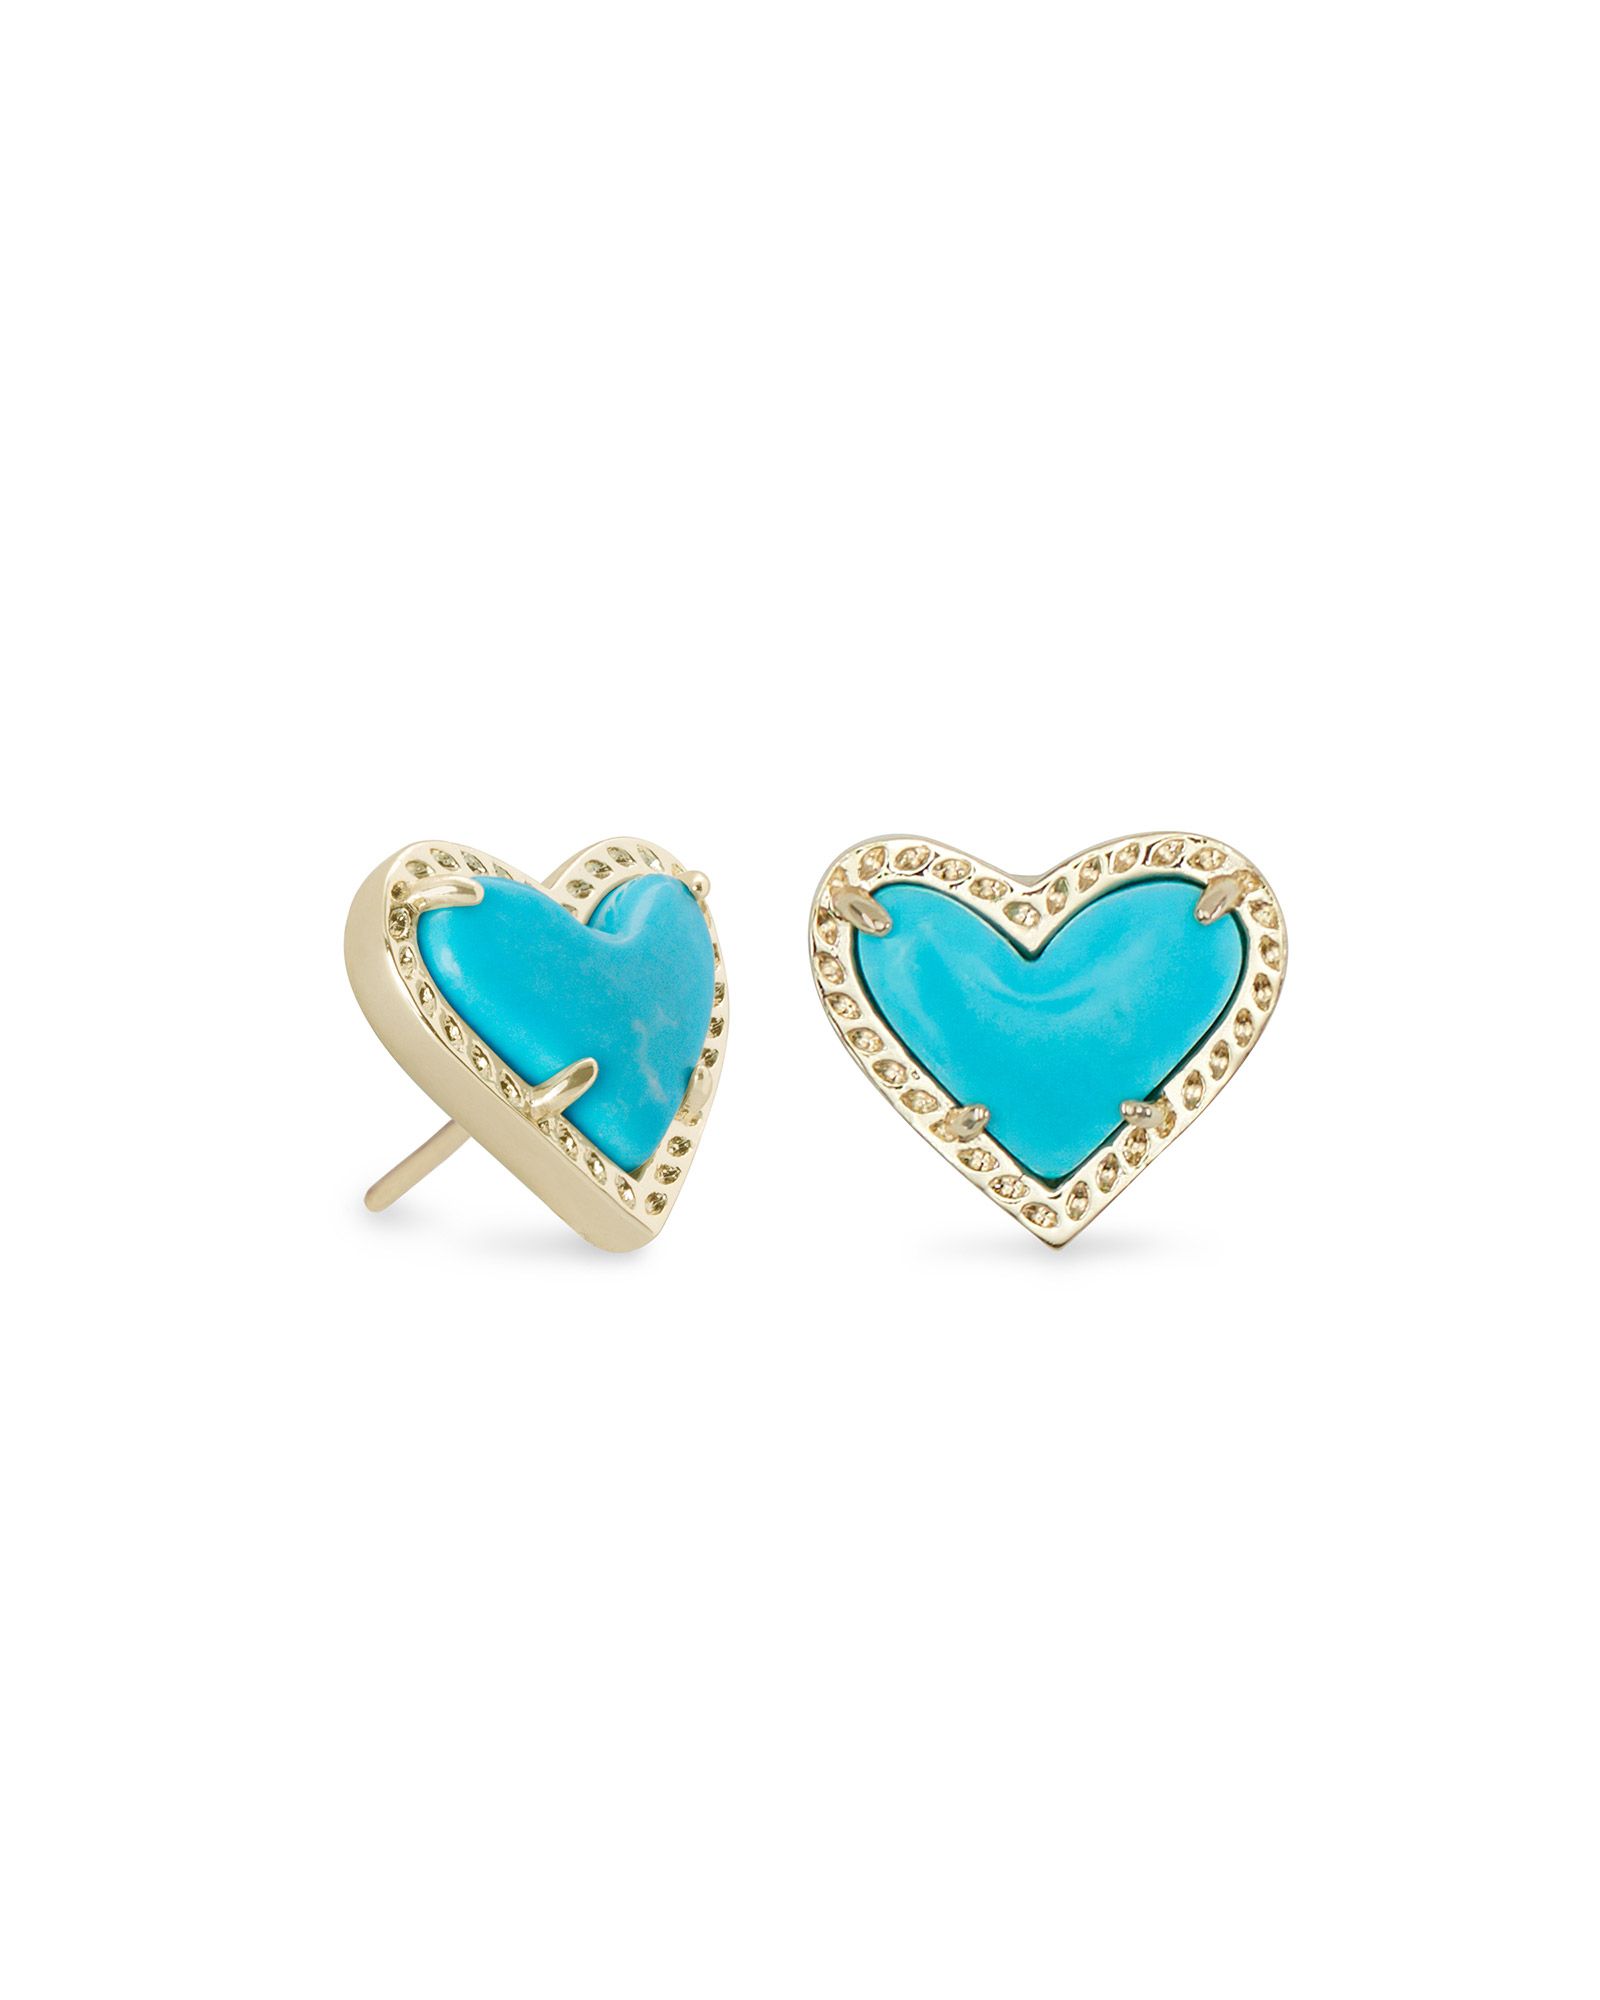 Ari Heart Gold Stud Earrings in Turquoise Magnesite | Kendra Scott